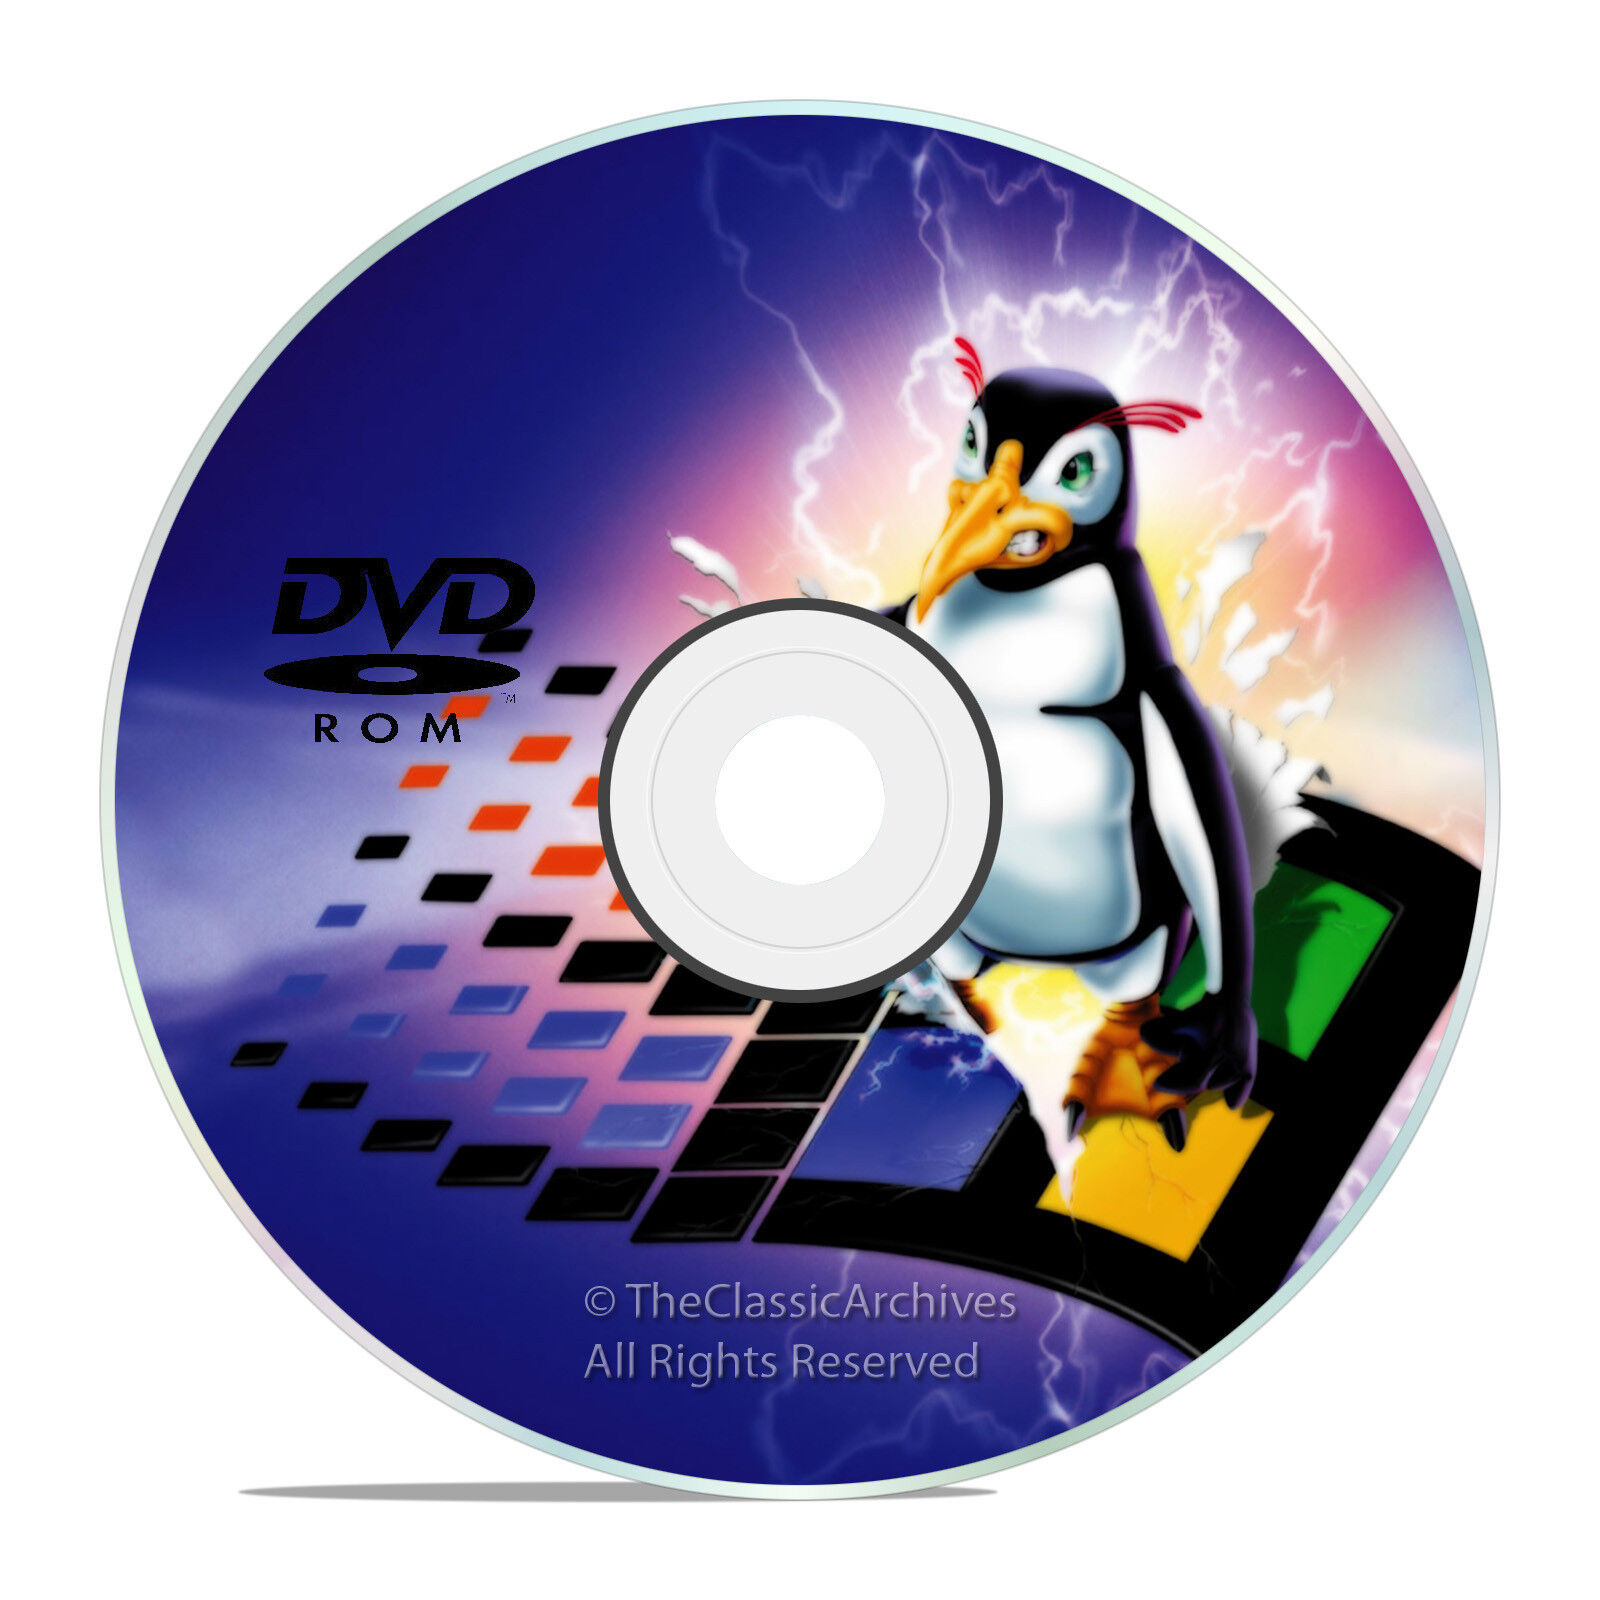 LINUX UBUNTU 32 BIT OPERATING SYSTEM-DUMP WINDOWS 7 WITH THIS OS, 17.04 DVD